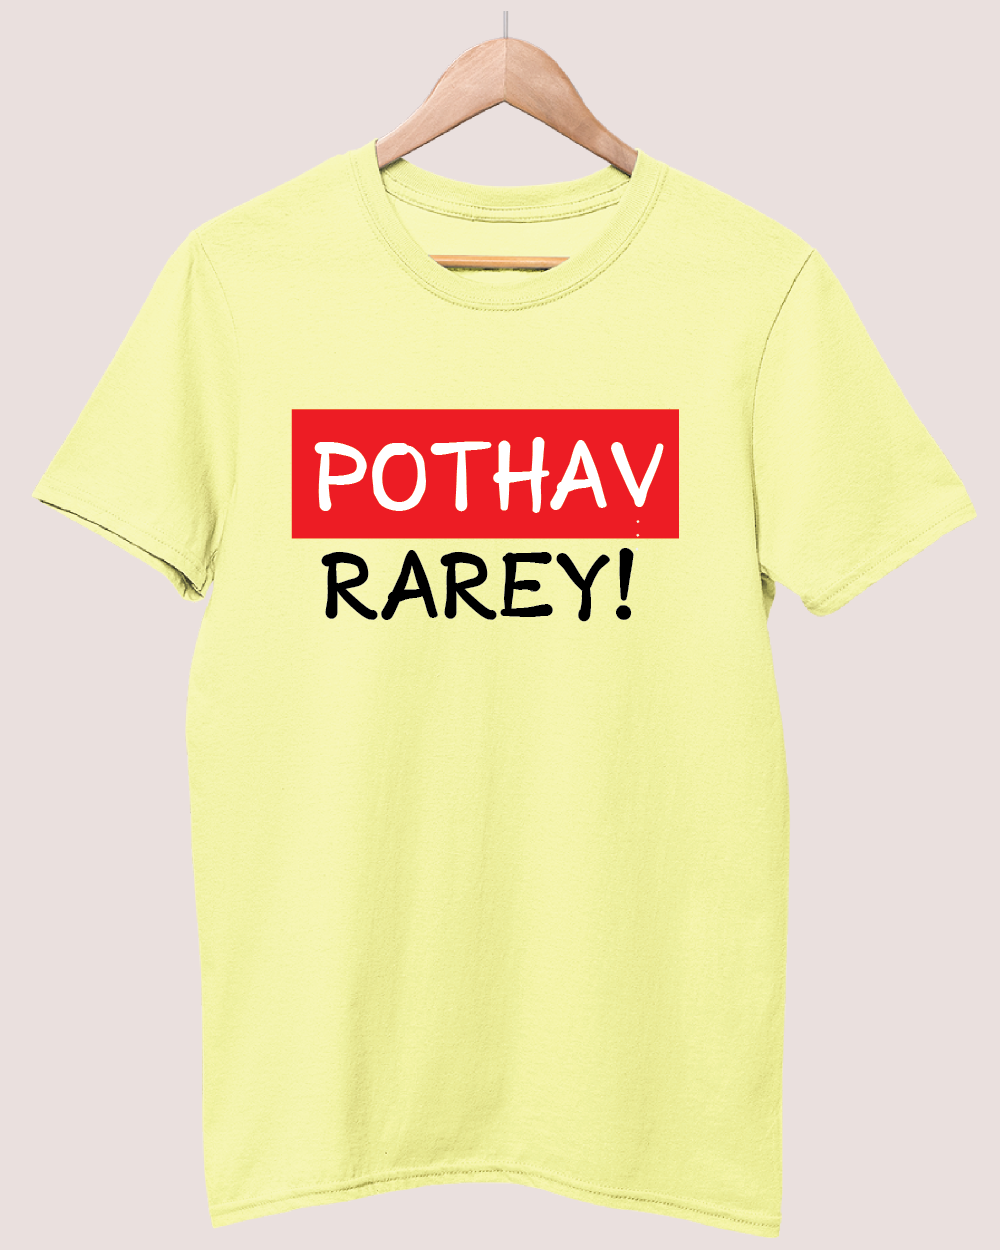 Pothav Rarey T-shirt